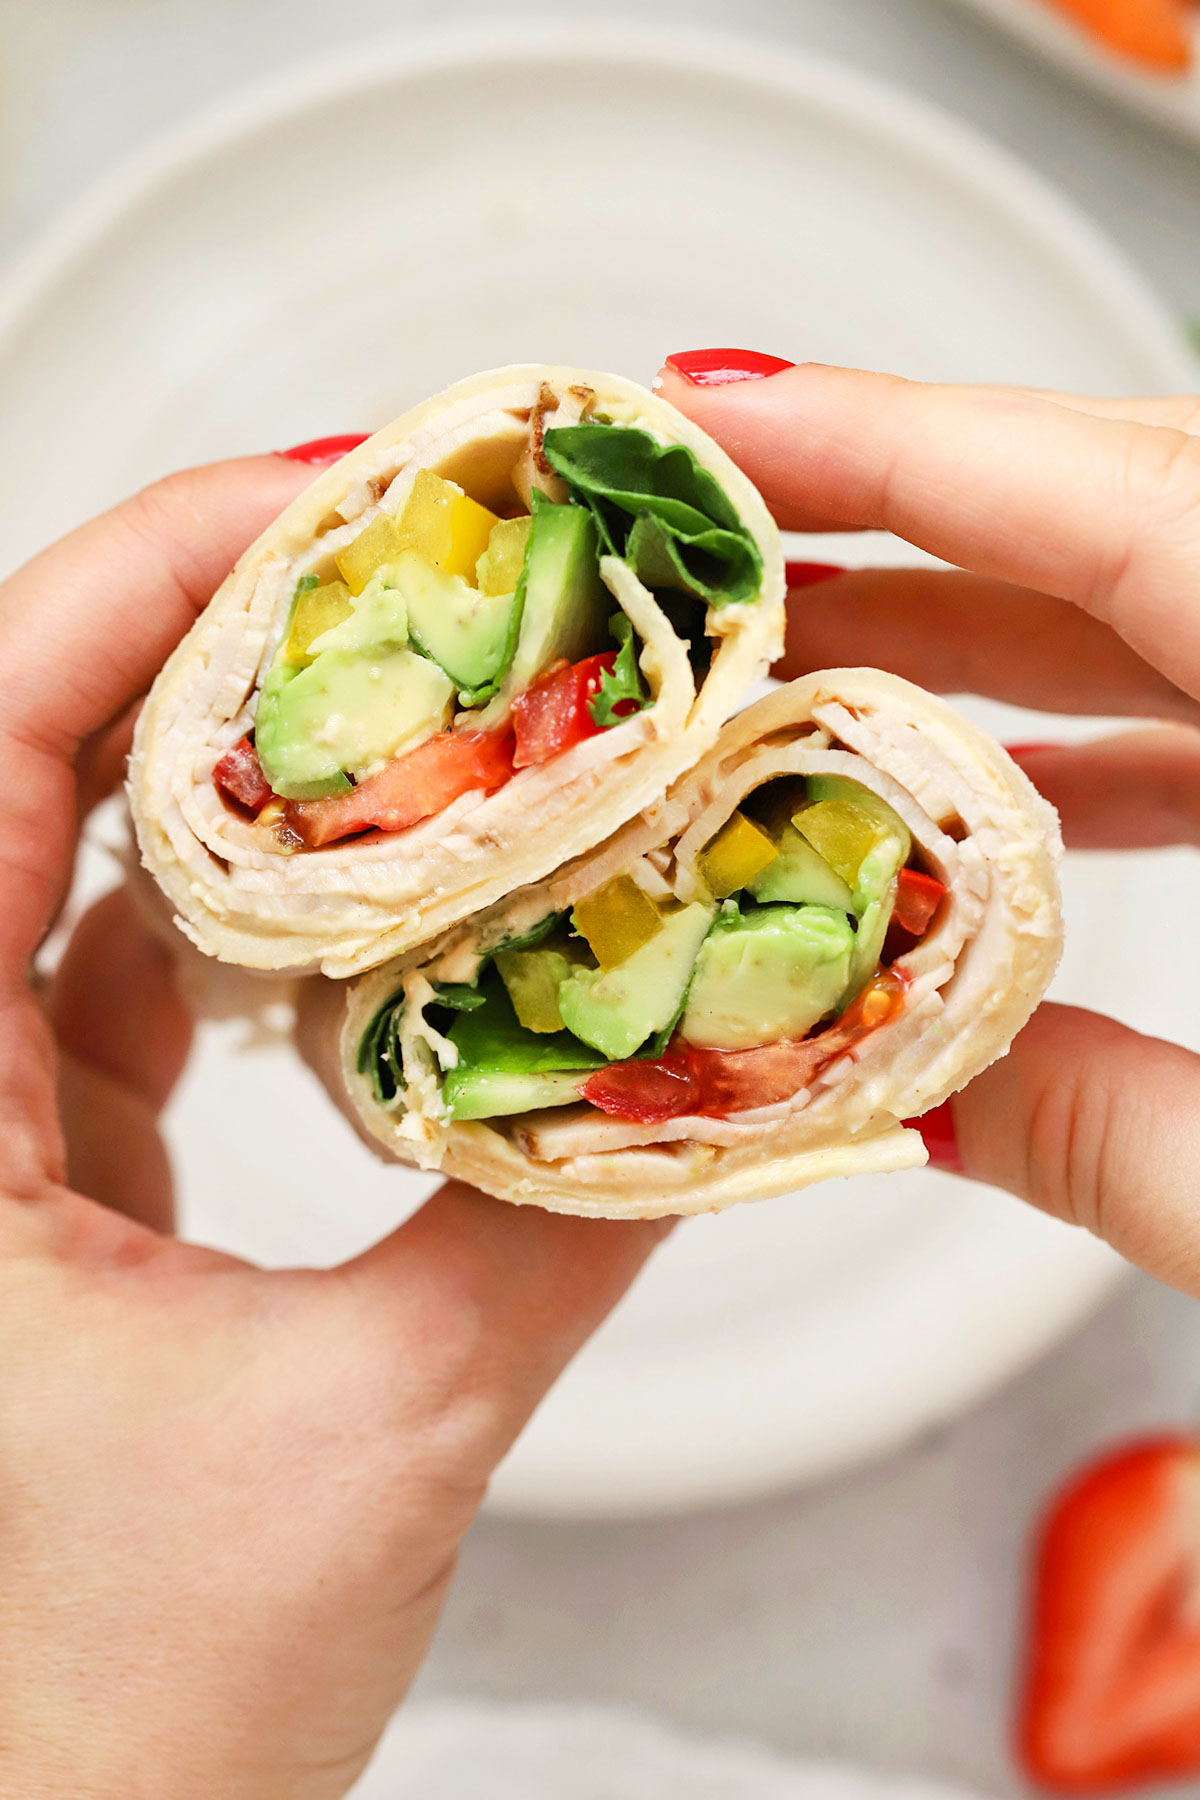 Gluten-free turkey wrap with hummus, avocado, and fresh veggies